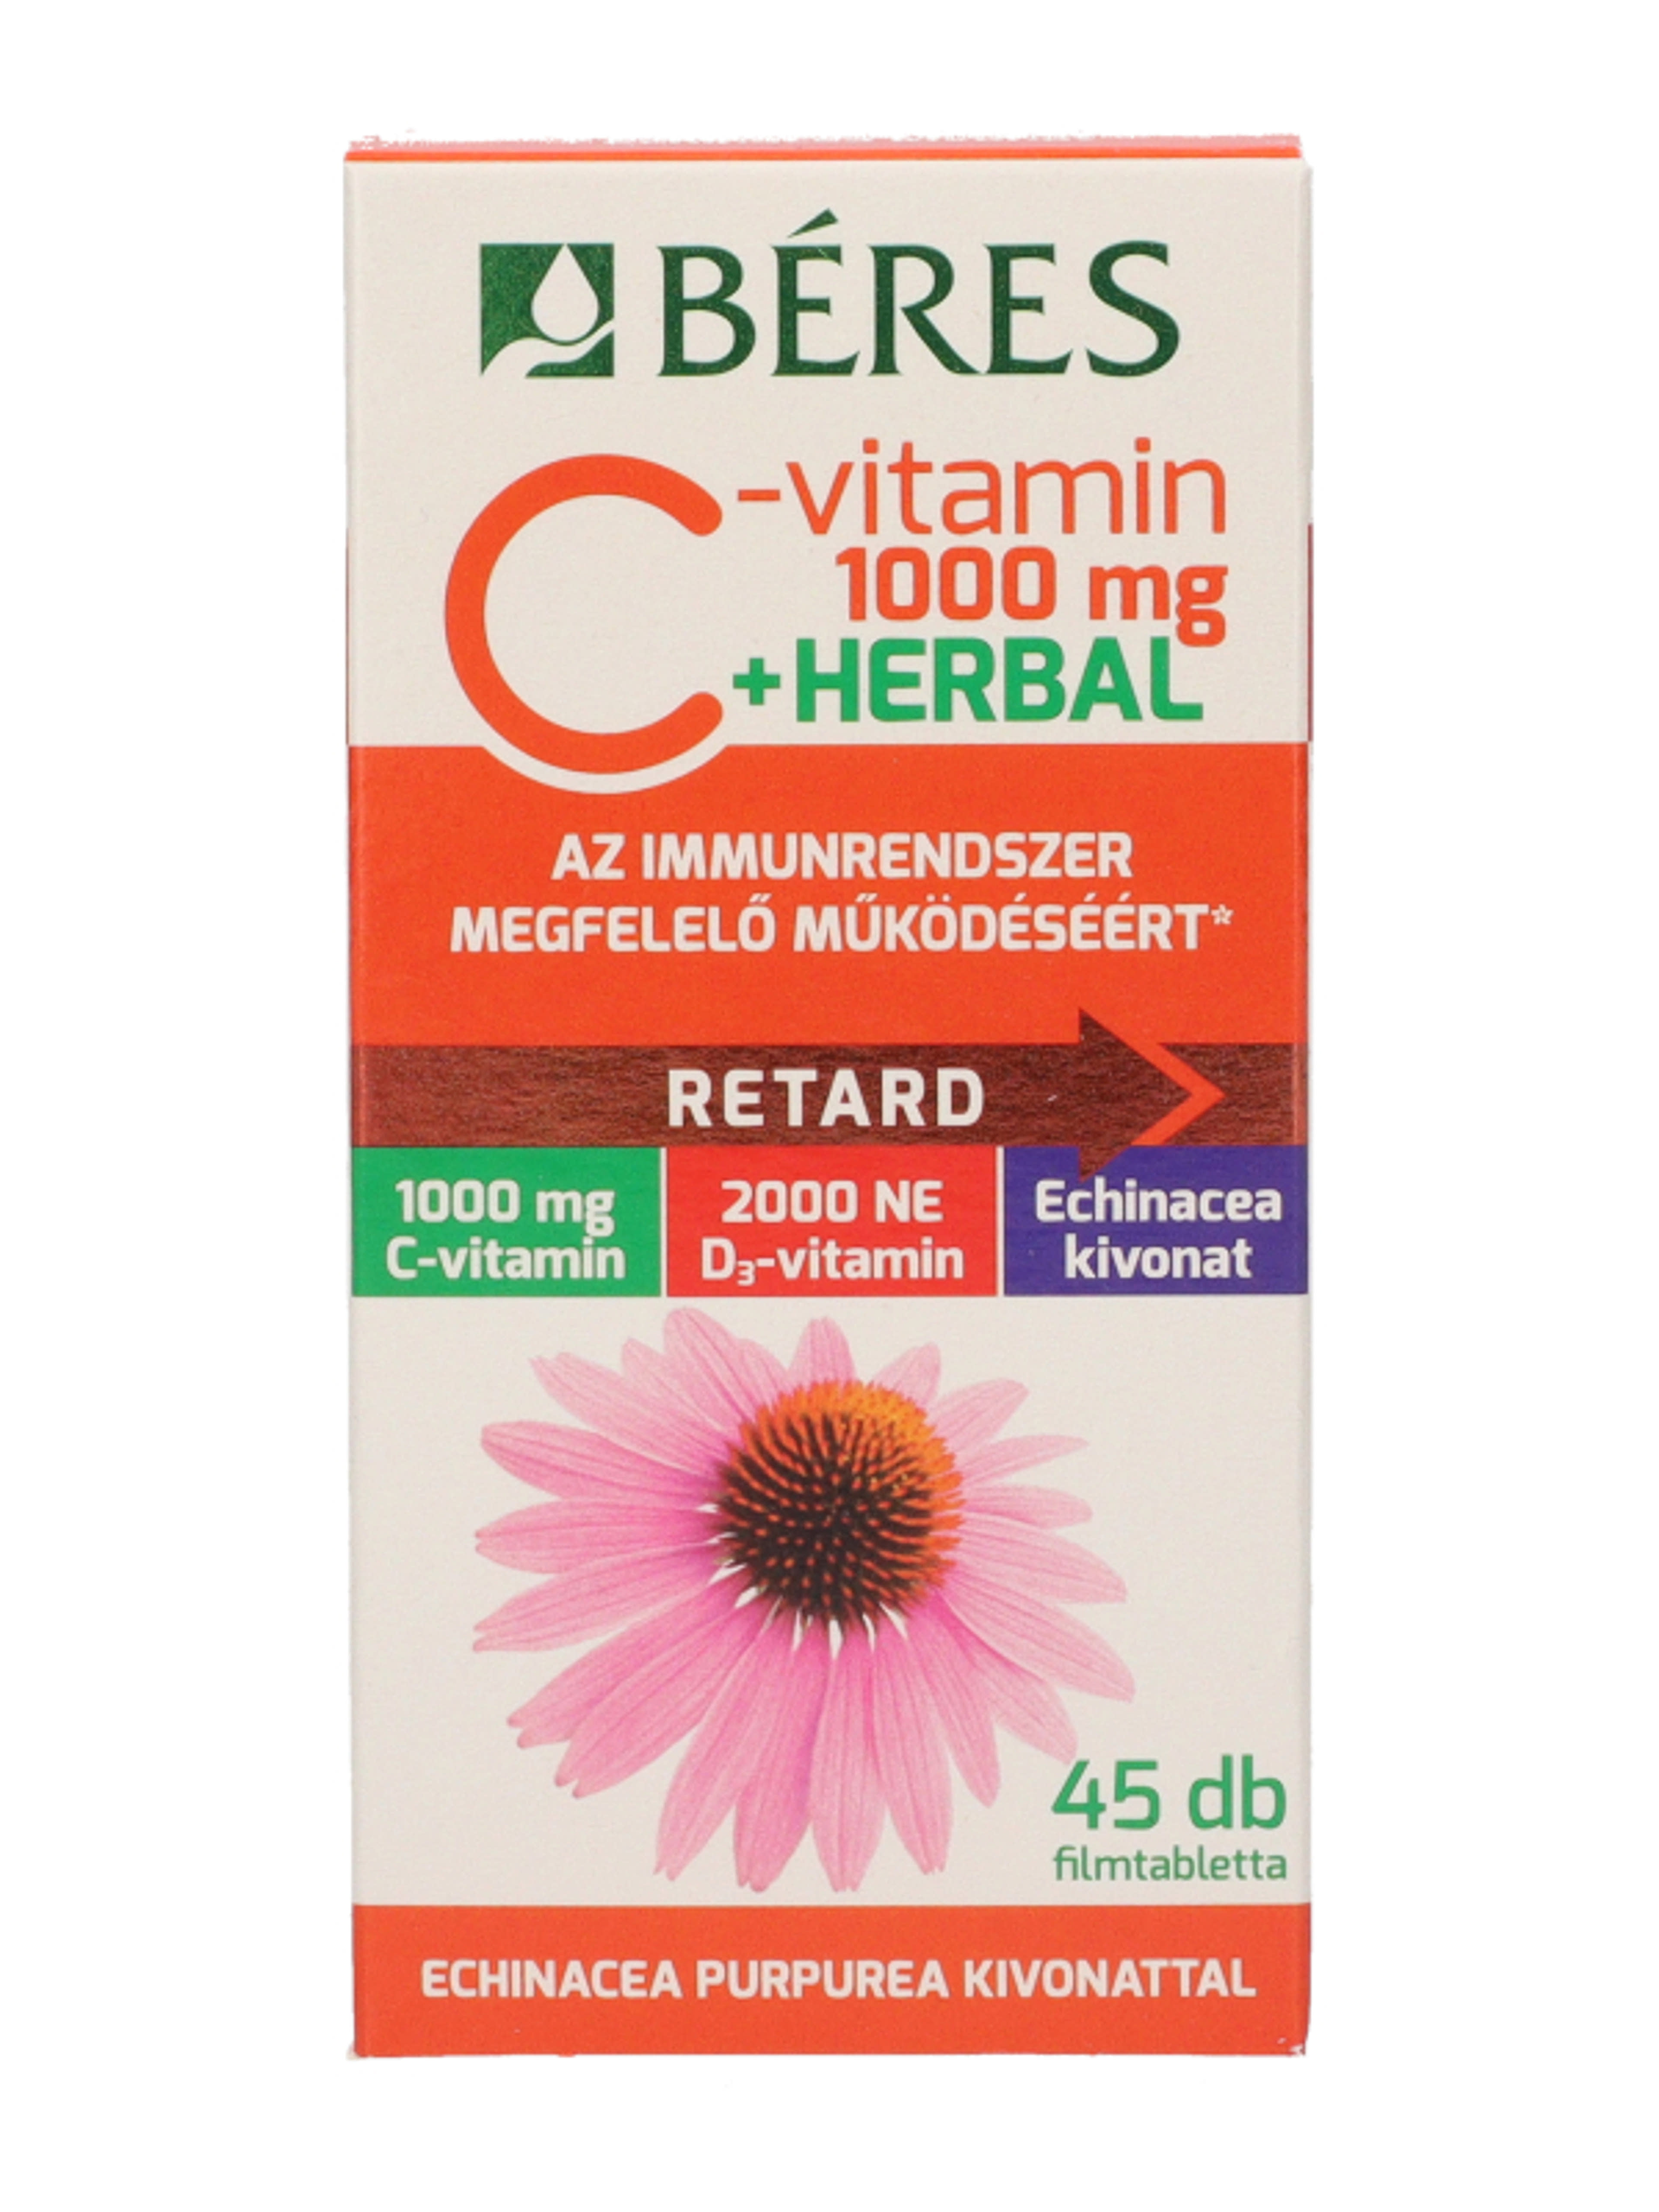 Béres Retard C-vitamin1000 mg +Herbal filmtabletta - 45 db-1